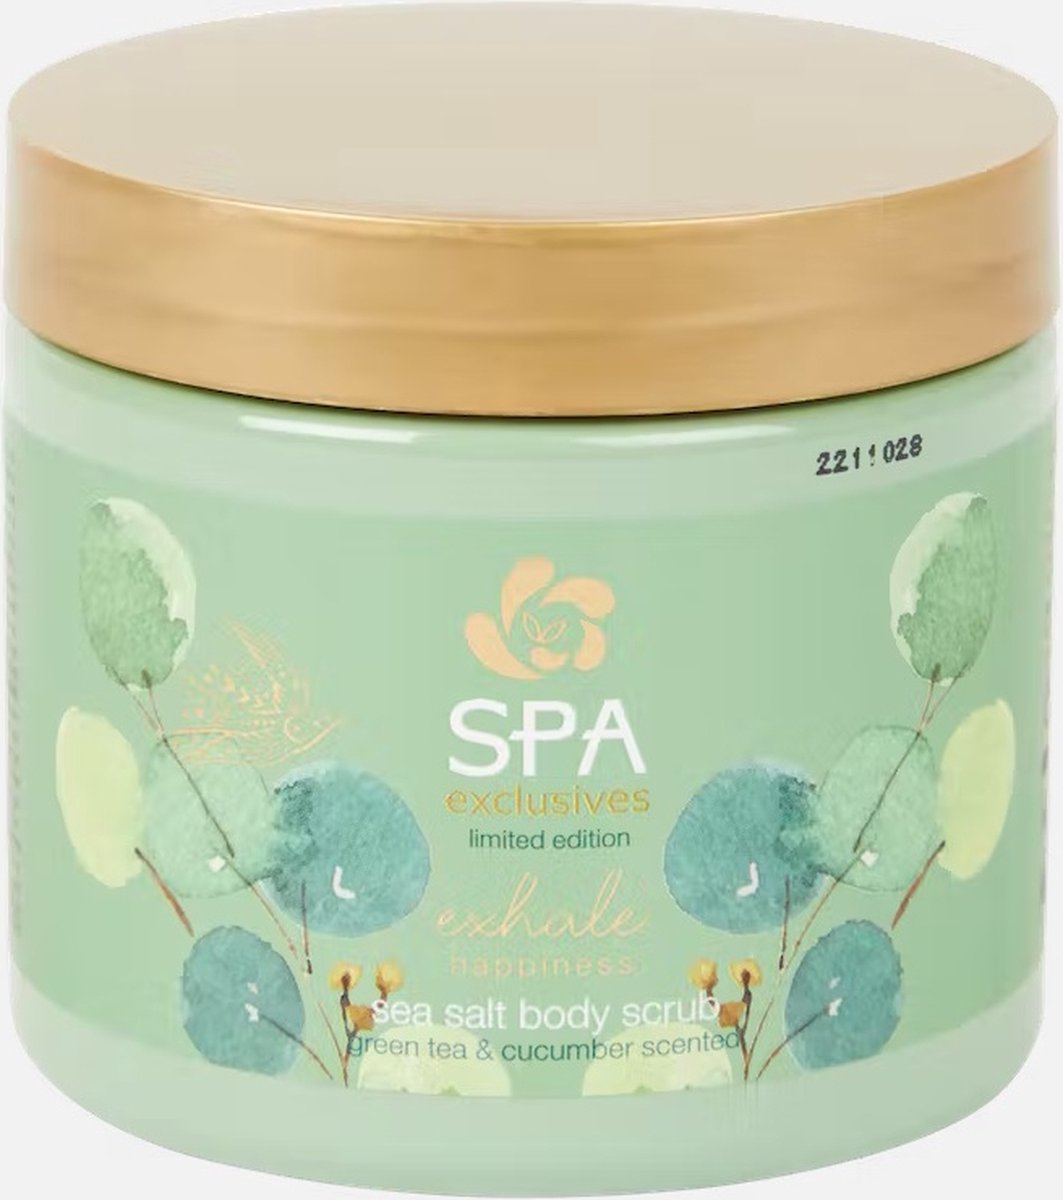 Sea salt body scrub Exhale Happiness 500 gram - Green tea & Cucumber - Spa Exclusives - Groene thee & komkommer Bodyscrub - Limited Edition - Vegan